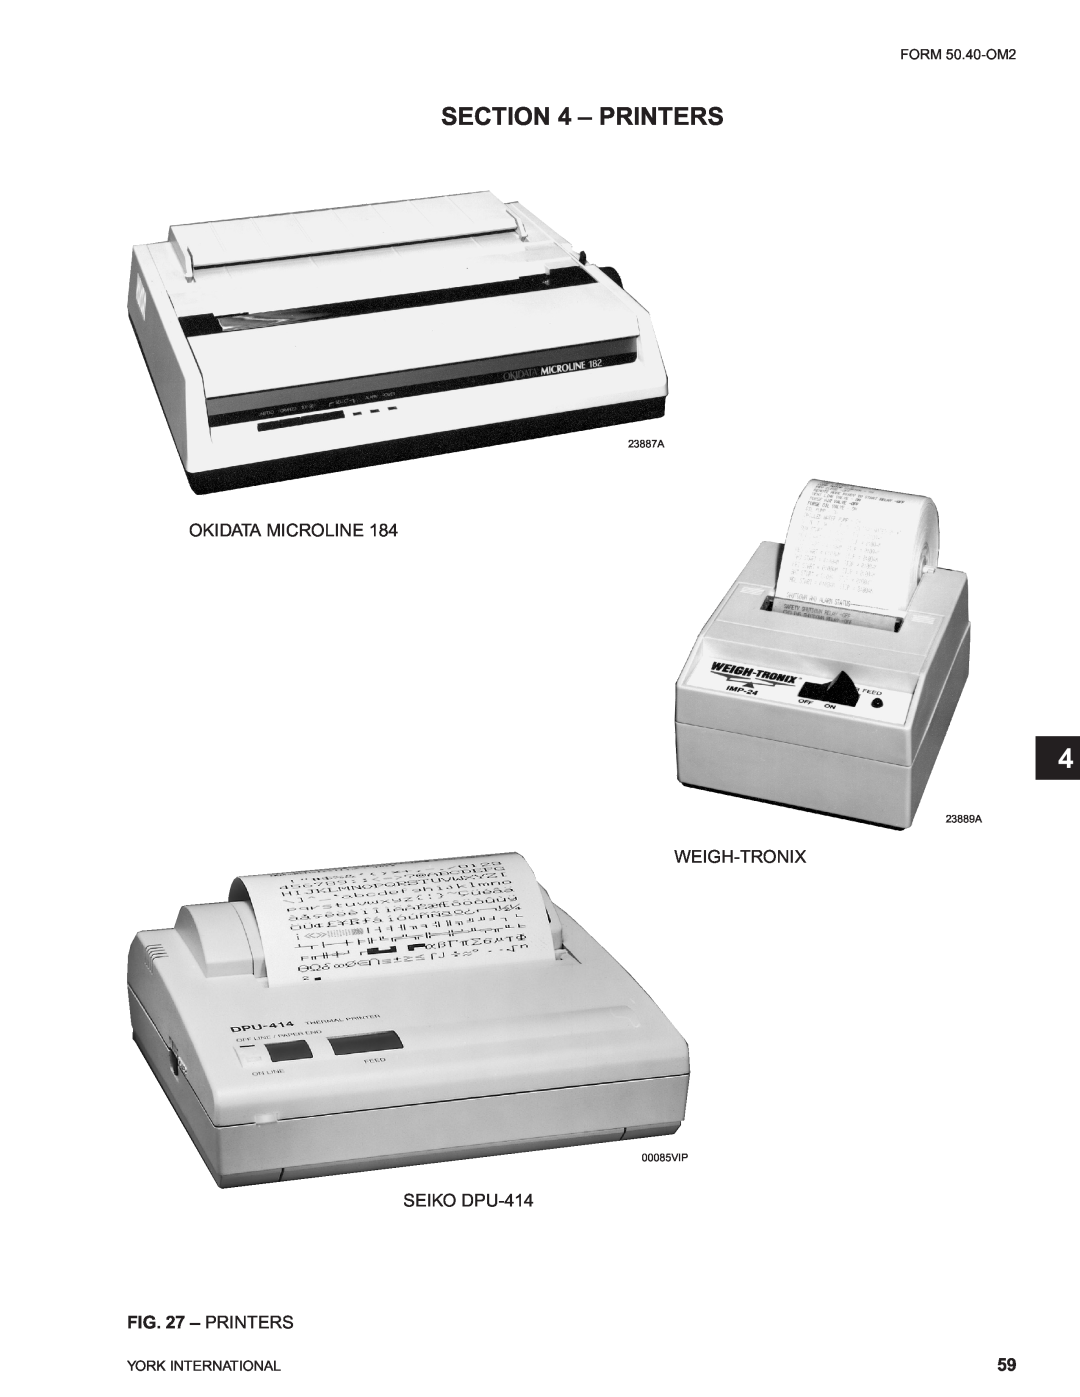 York 00497VIP manual Printers, Okidata Microline, Weigh-Tronix, SEIKO DPU-414, 23887A, 23889A, 00085VIP 